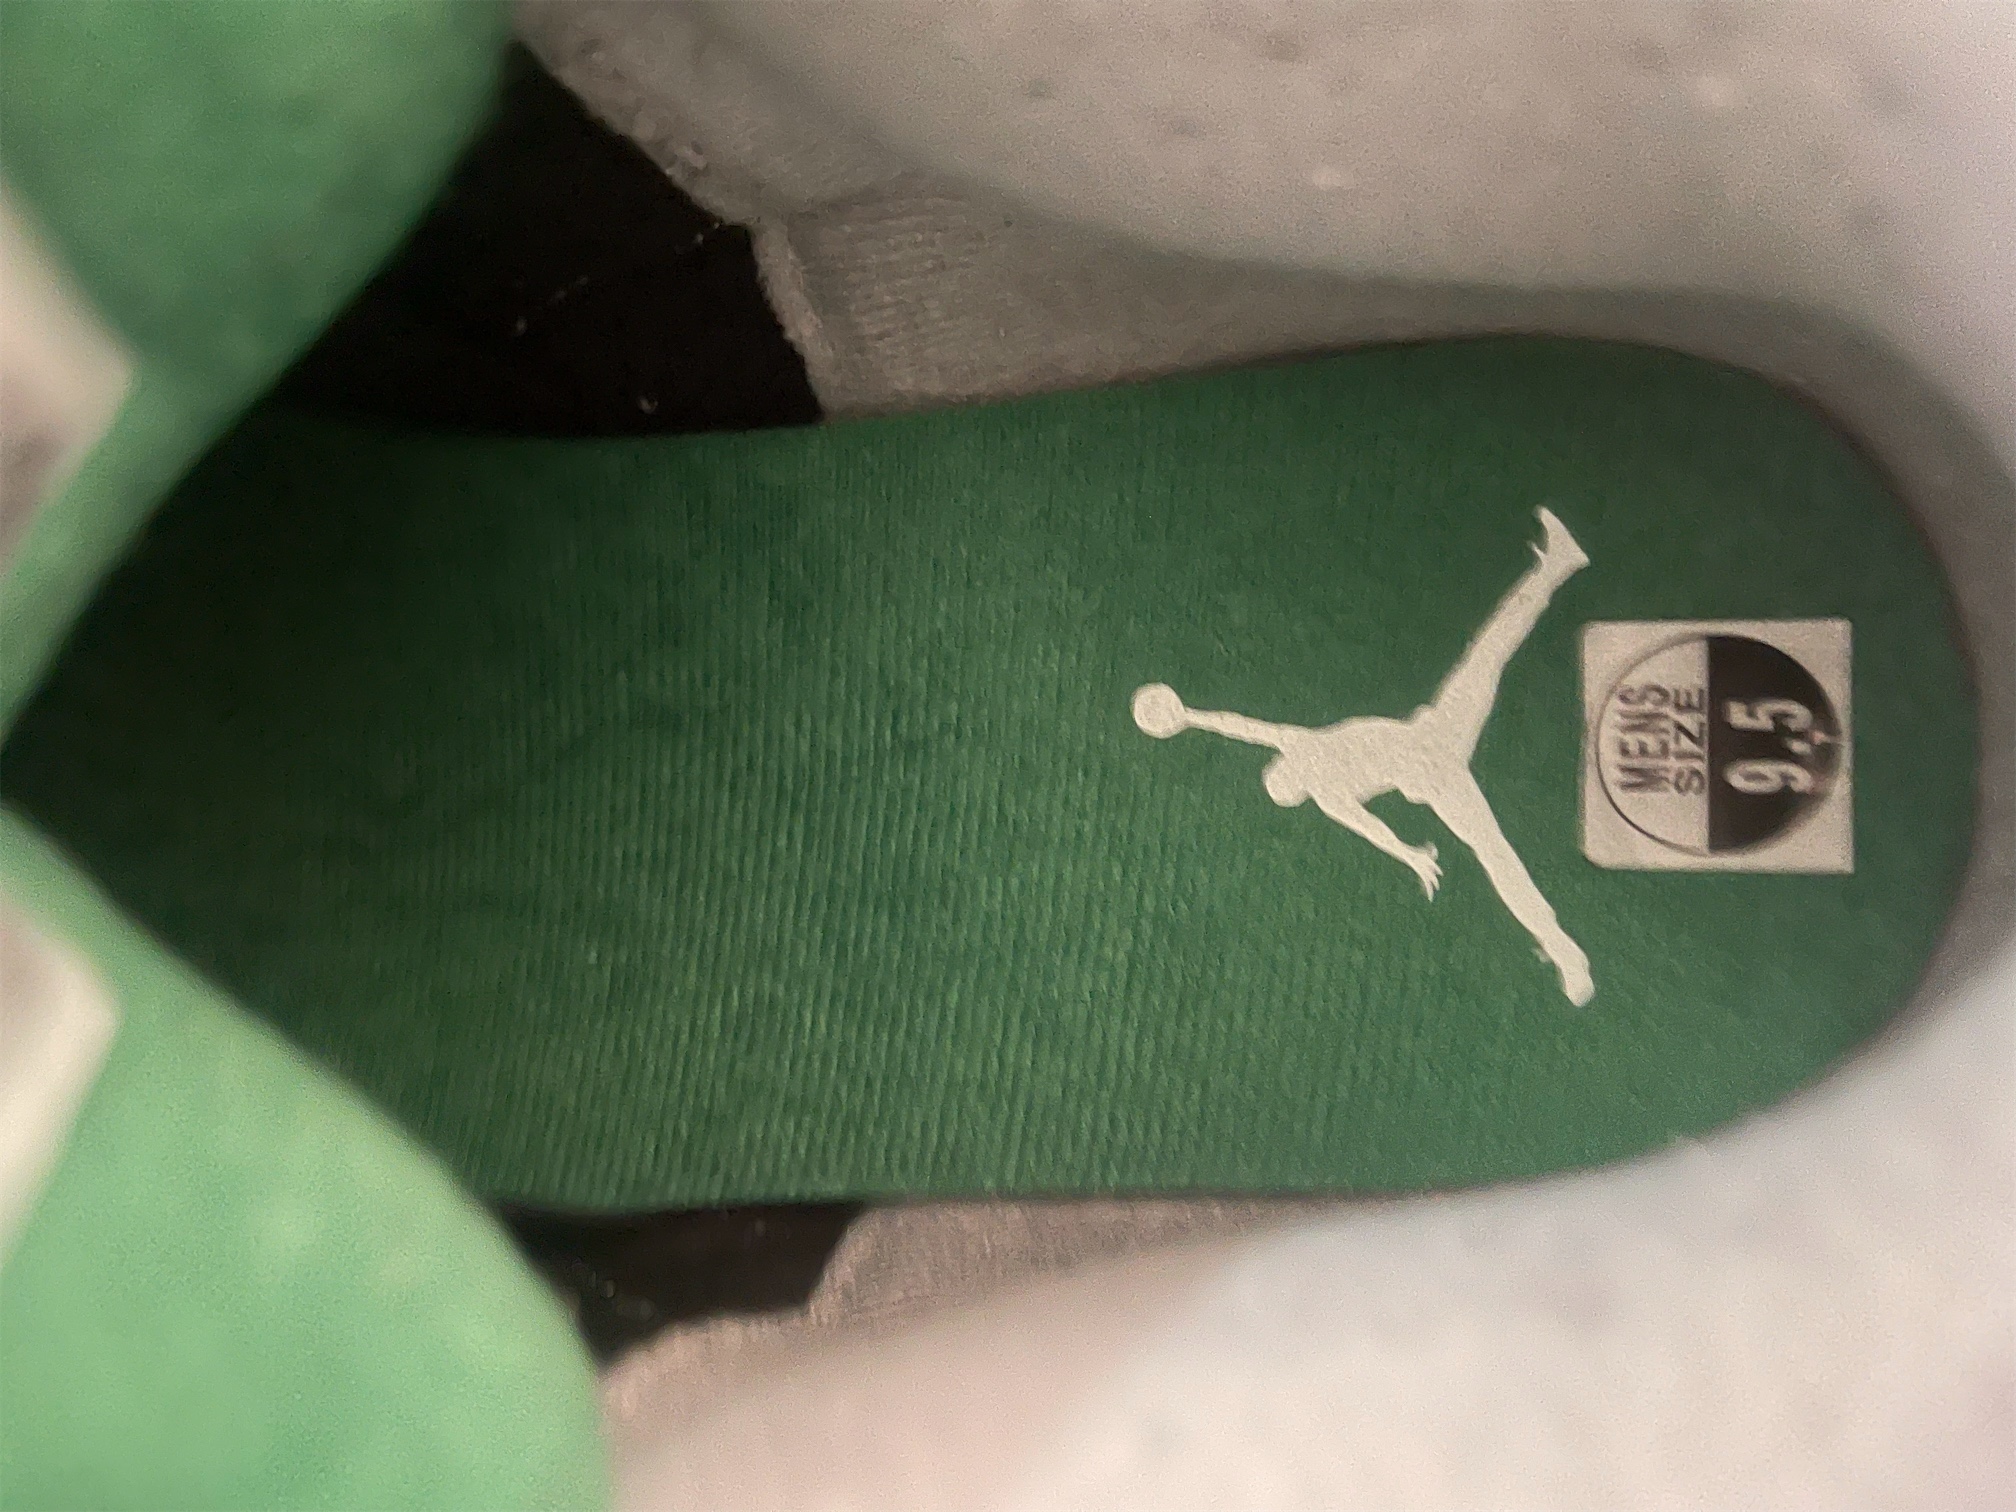 zapatos para hombre - Jordan 3 pine green size 9.5 del kilo 2